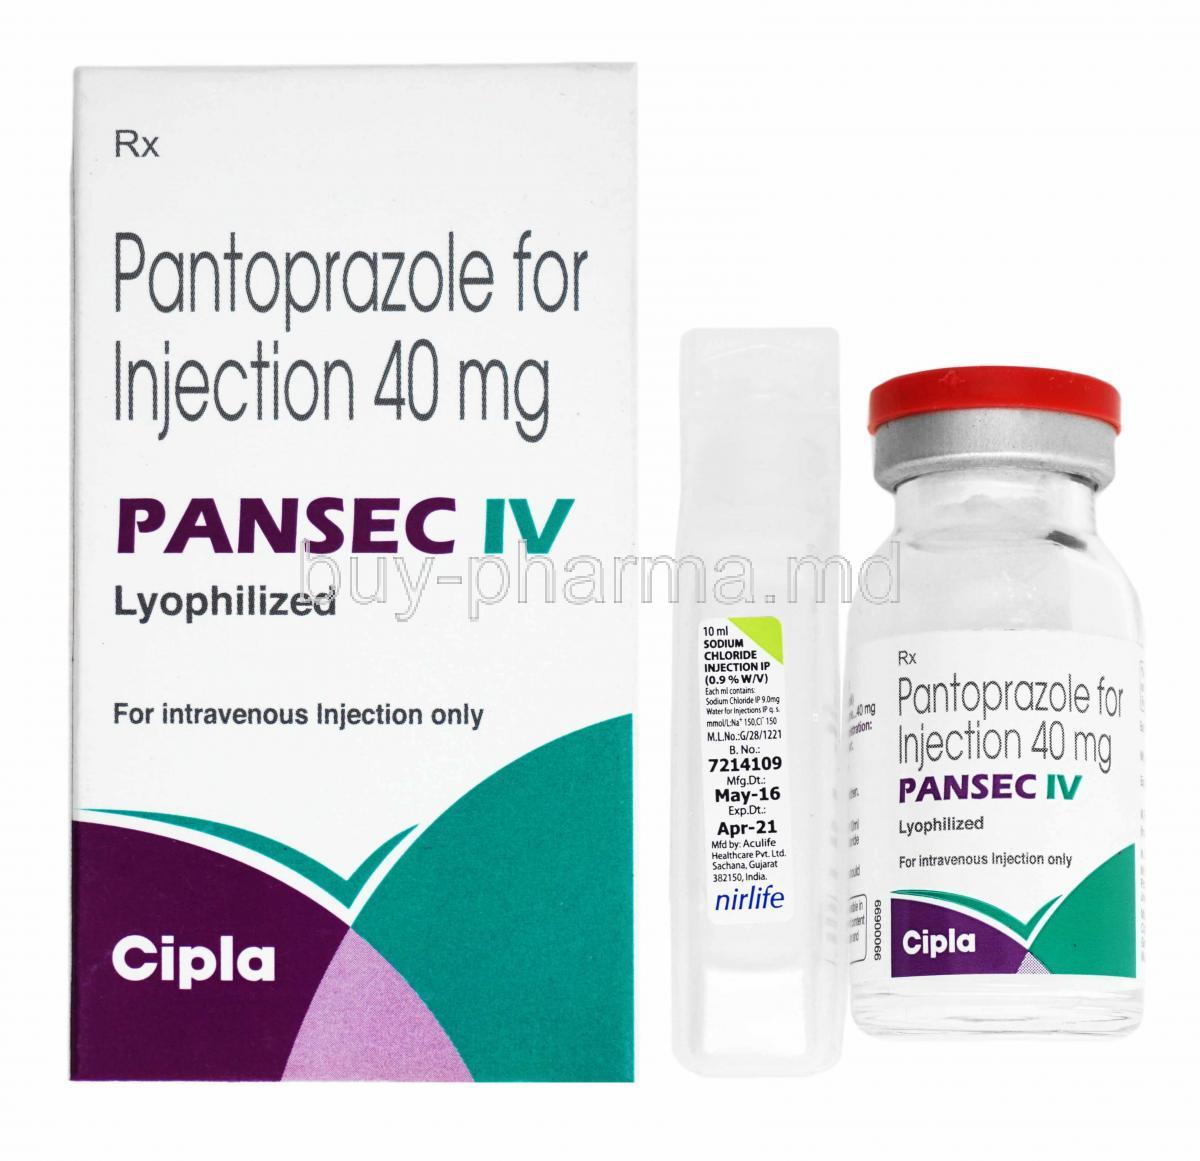 Pansec Injection, Pantoprazole box and vial